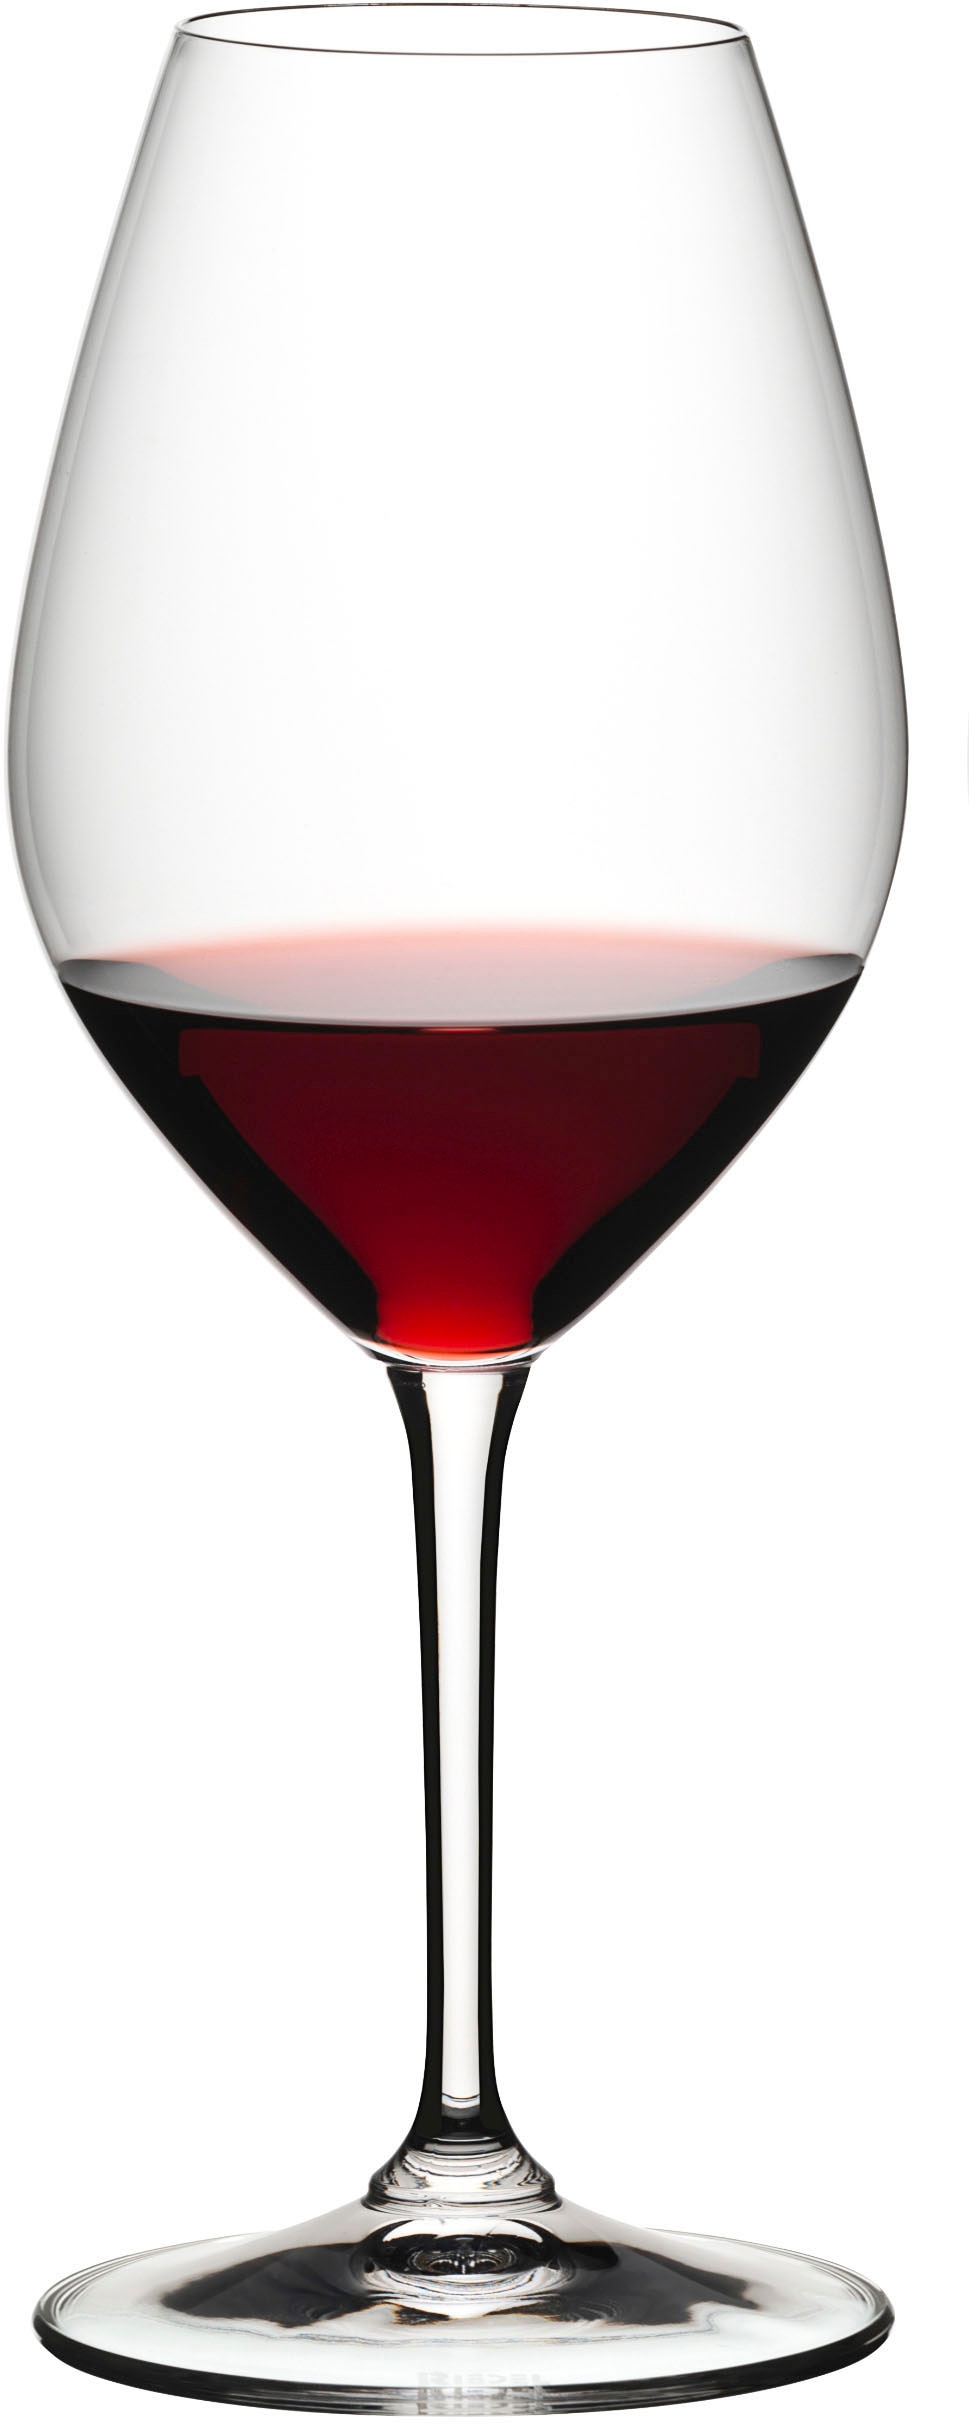 RIEDEL WINE FRIENDLY Rotweinglas »Wine Friendly«, (Set, 4 tlg., RED WINE), Made in Germany, 667 ml, 4-teilig